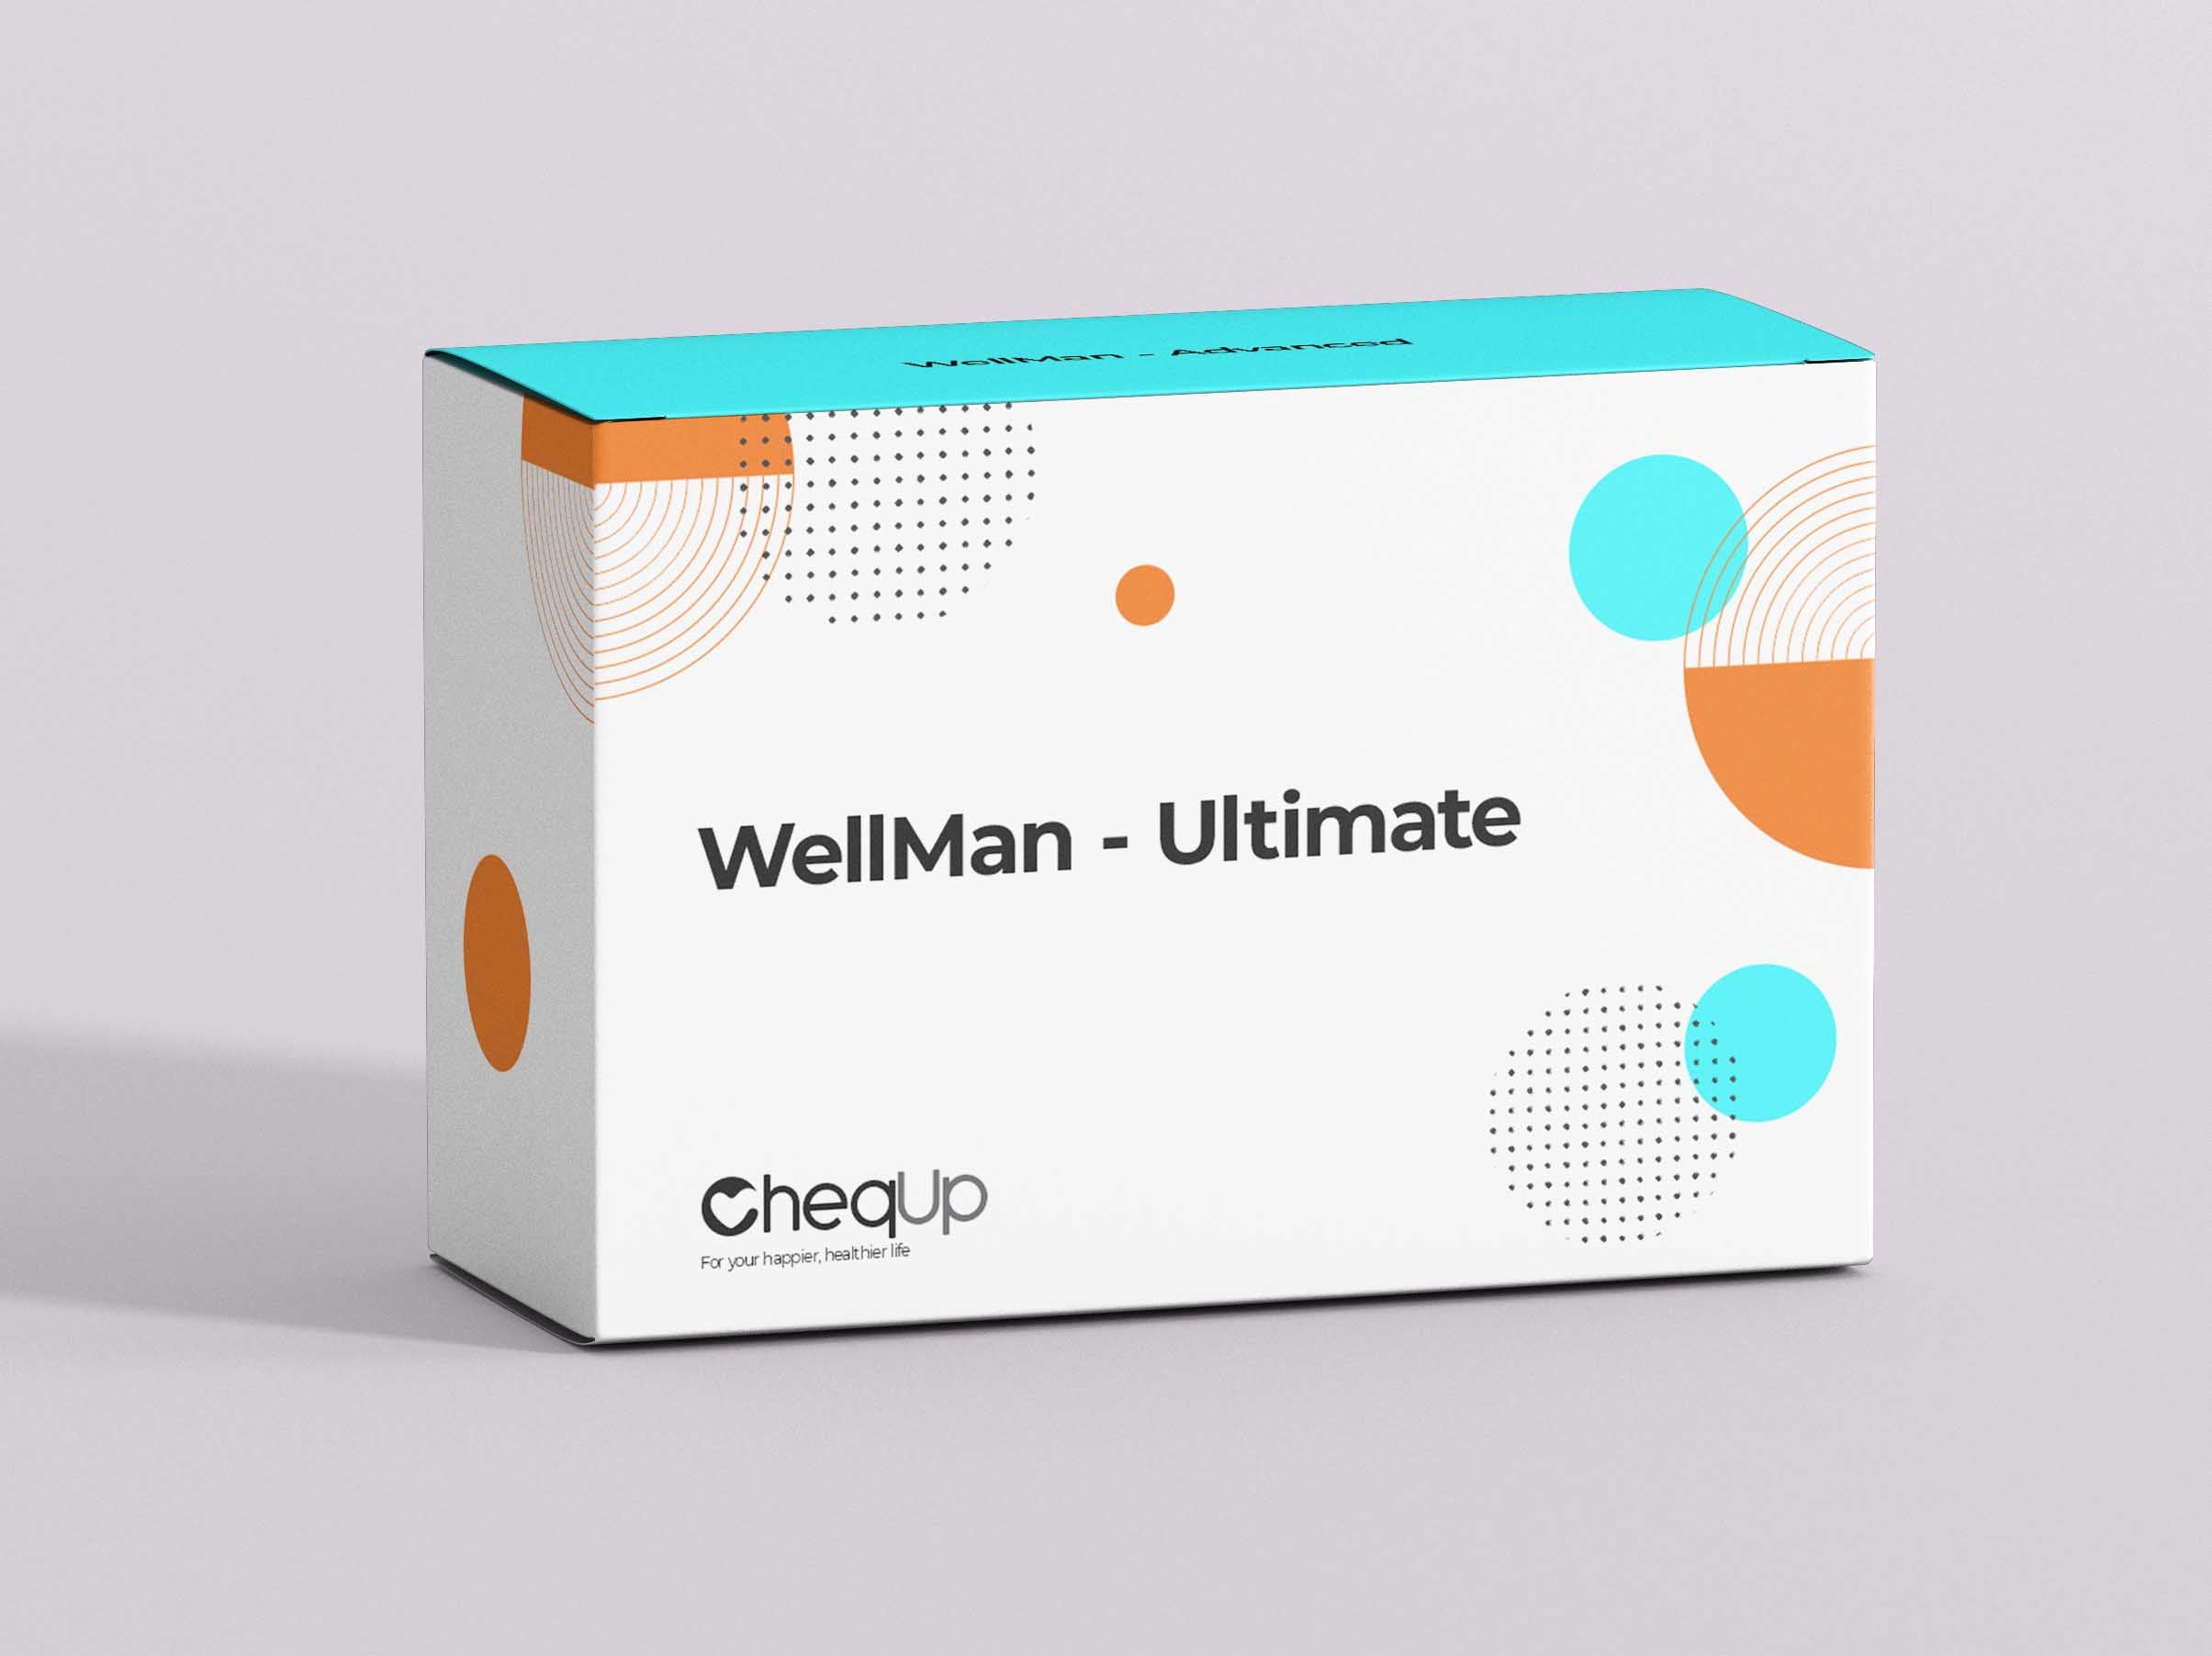 WellMan - Ultimate